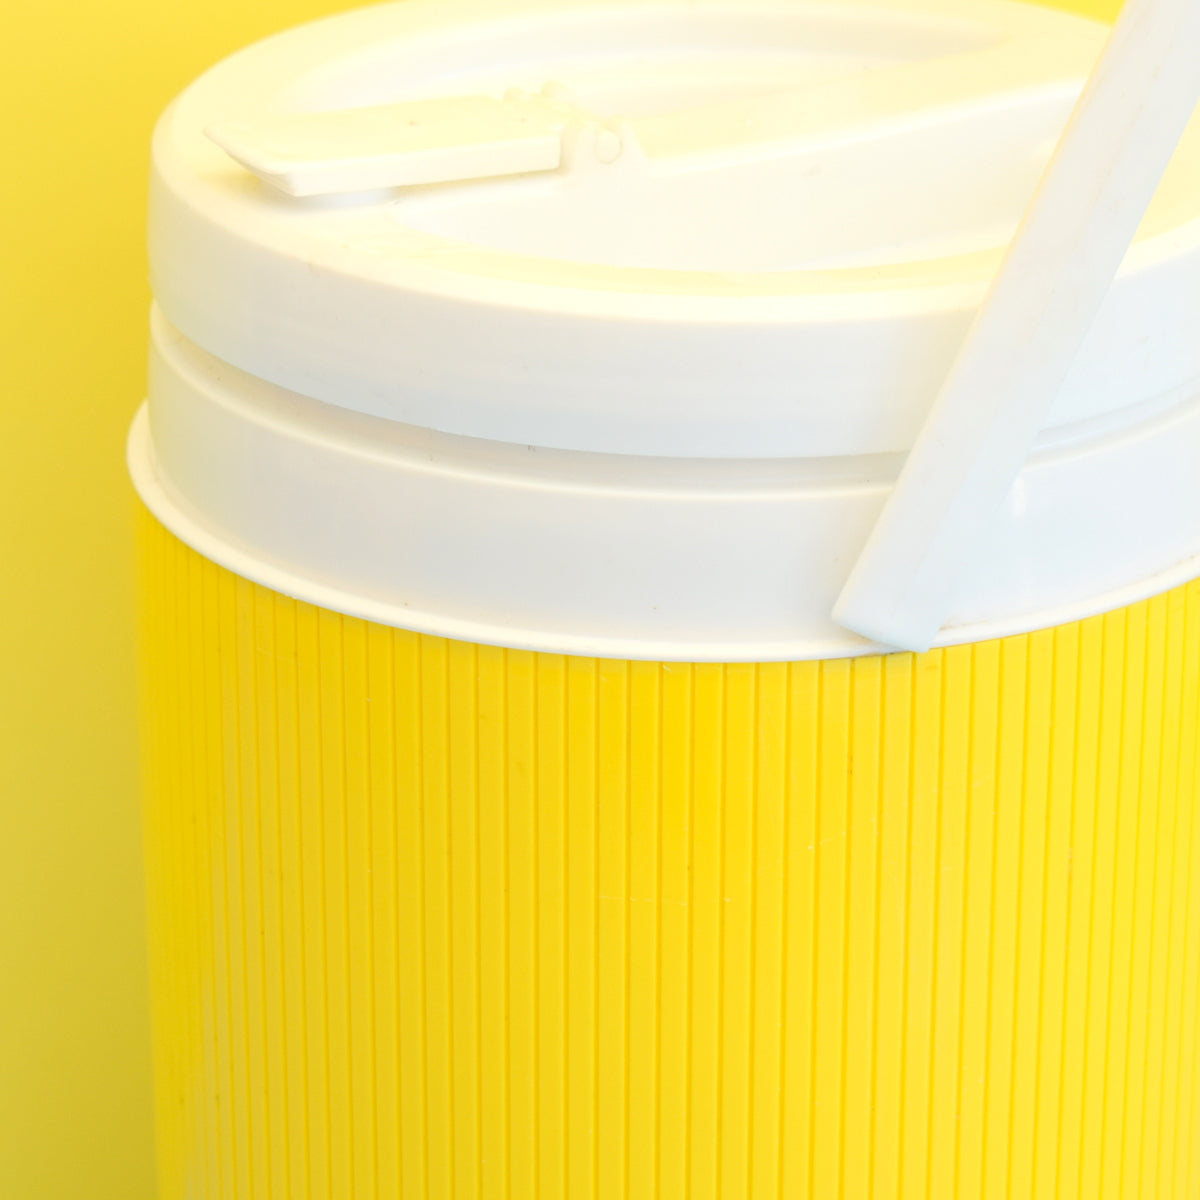 Vintage 1970s American plastic Drinks Dispenser - Yellow